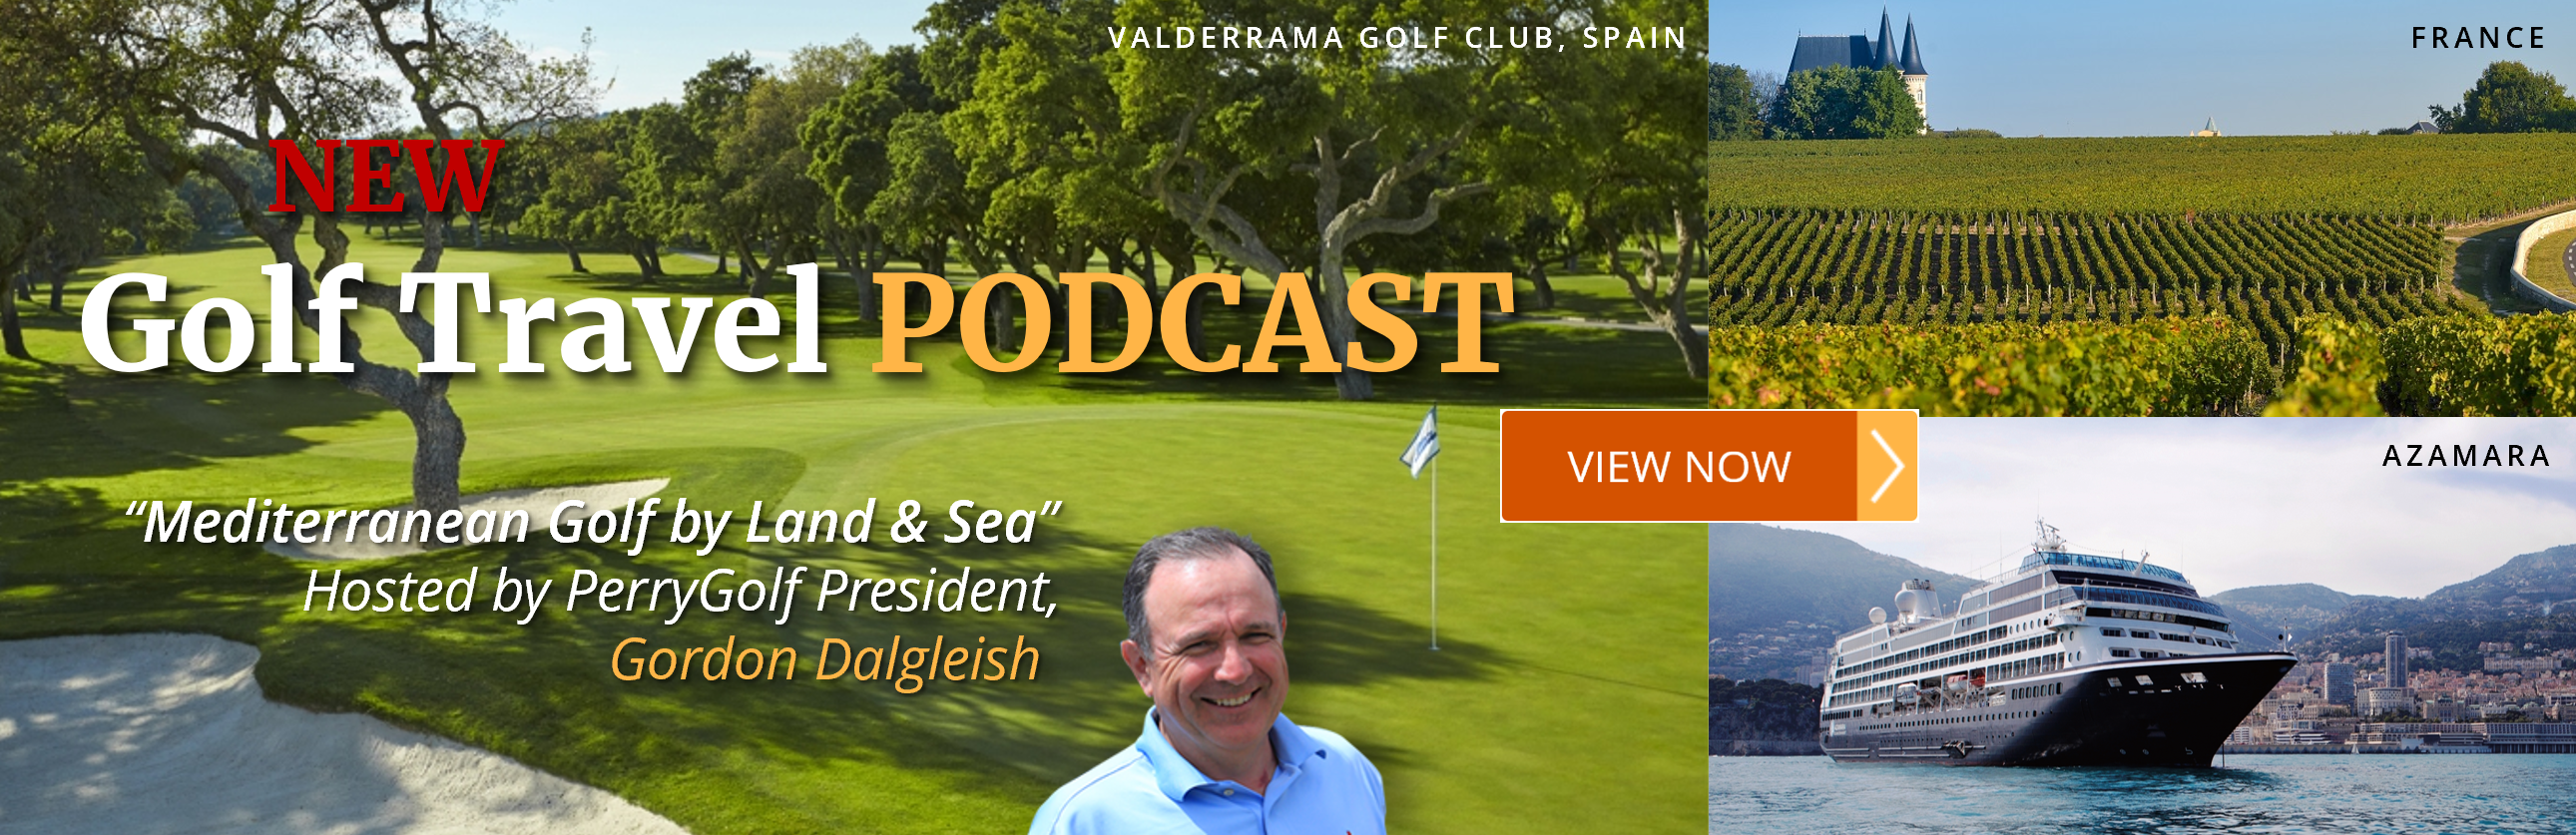 NEW Golf Travel PODCAST ~ "Mediterranean Golf by Land & Sea" | Hosted by PerryGolf President, Gordon Dalgleish